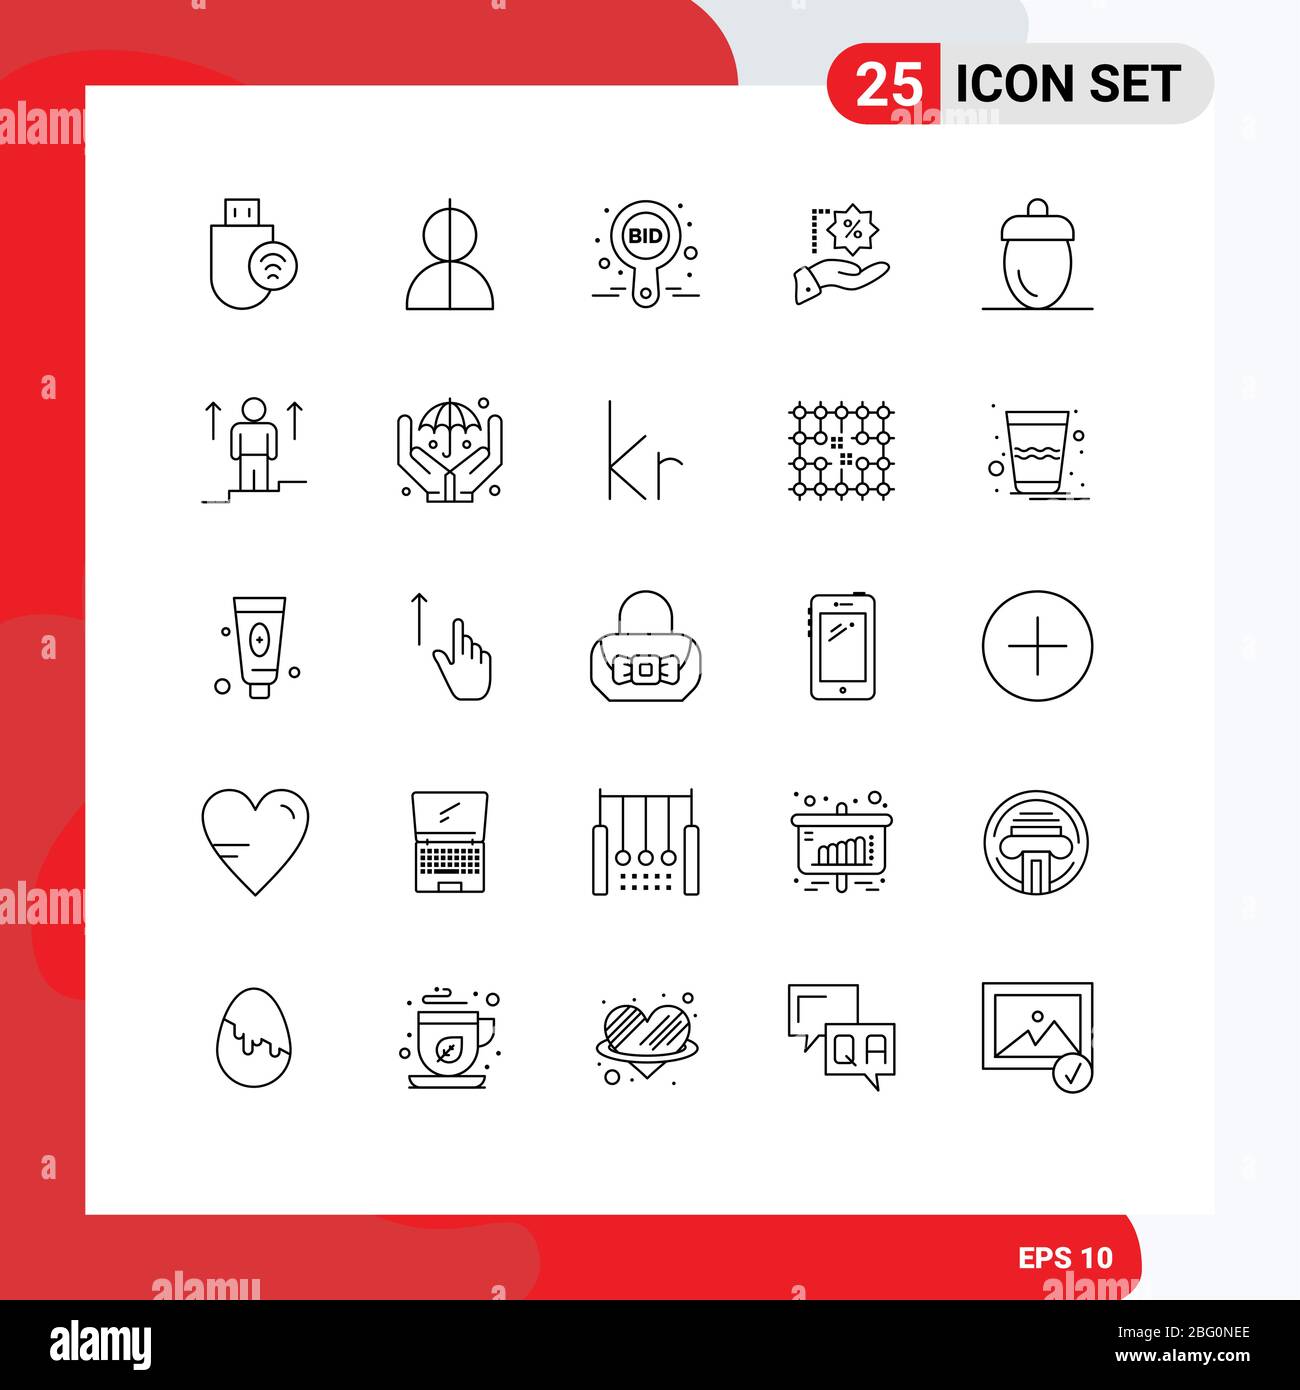 Set of 25 Modern UI Icons Symbols Signs for sale, discount, profile, label, bid Editable Vector Design Elements Stock Vector